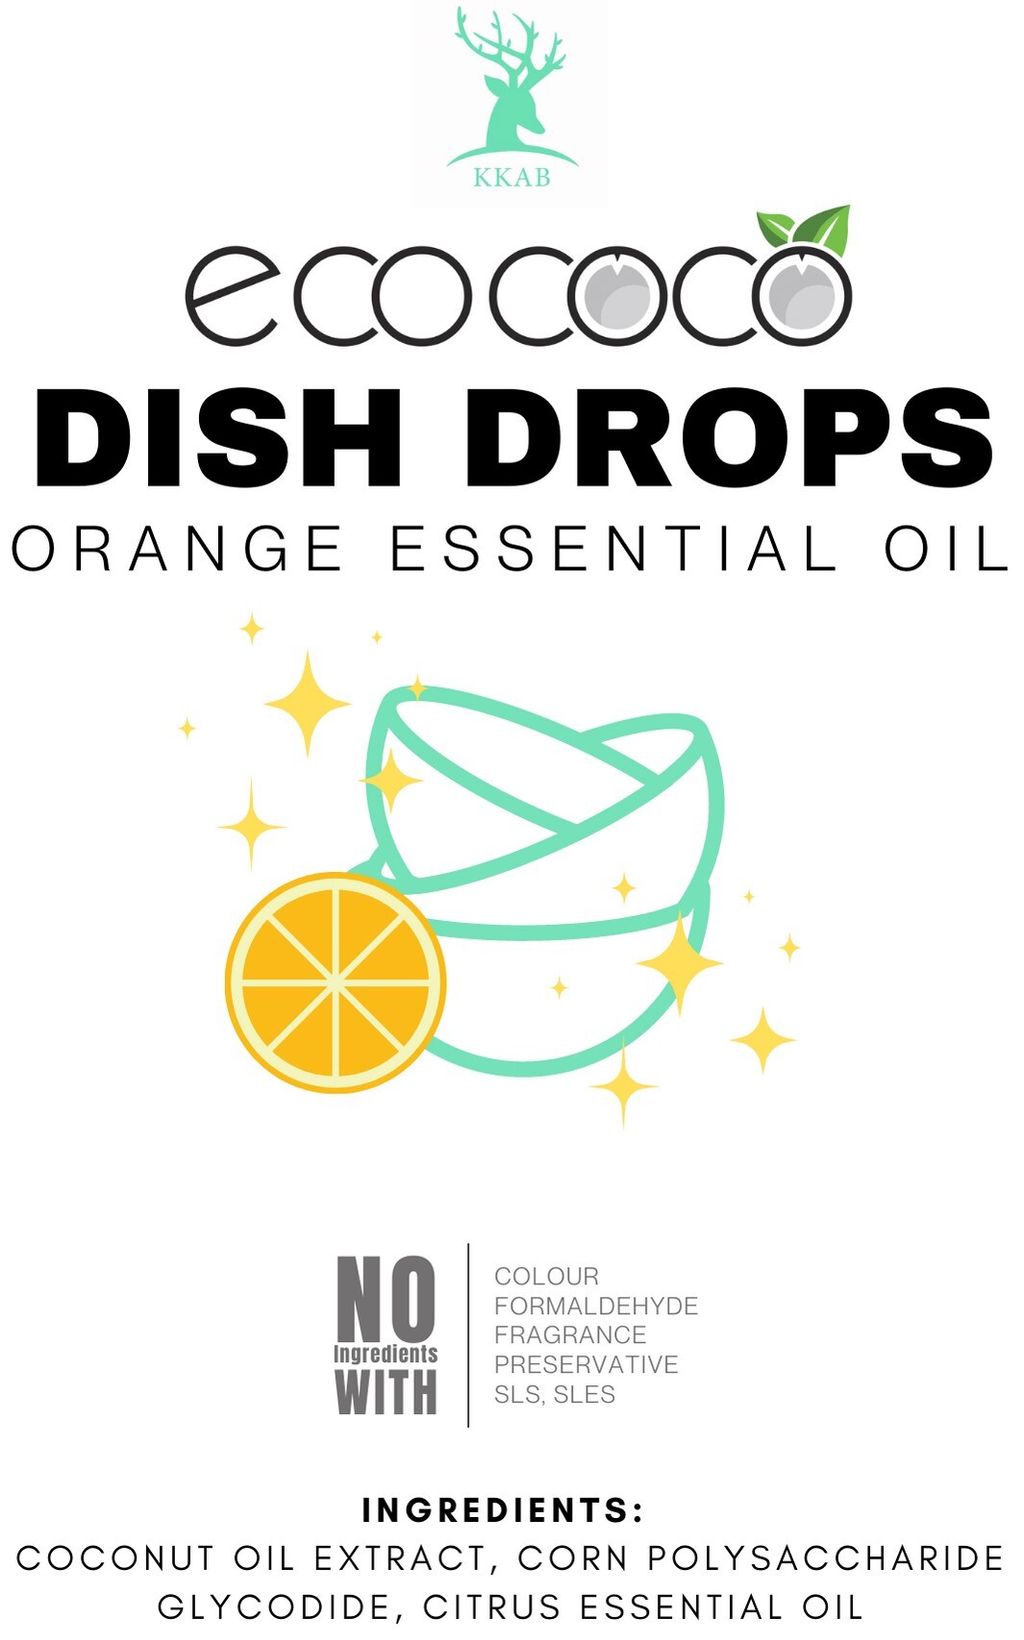 Ecococo dish drop card 1